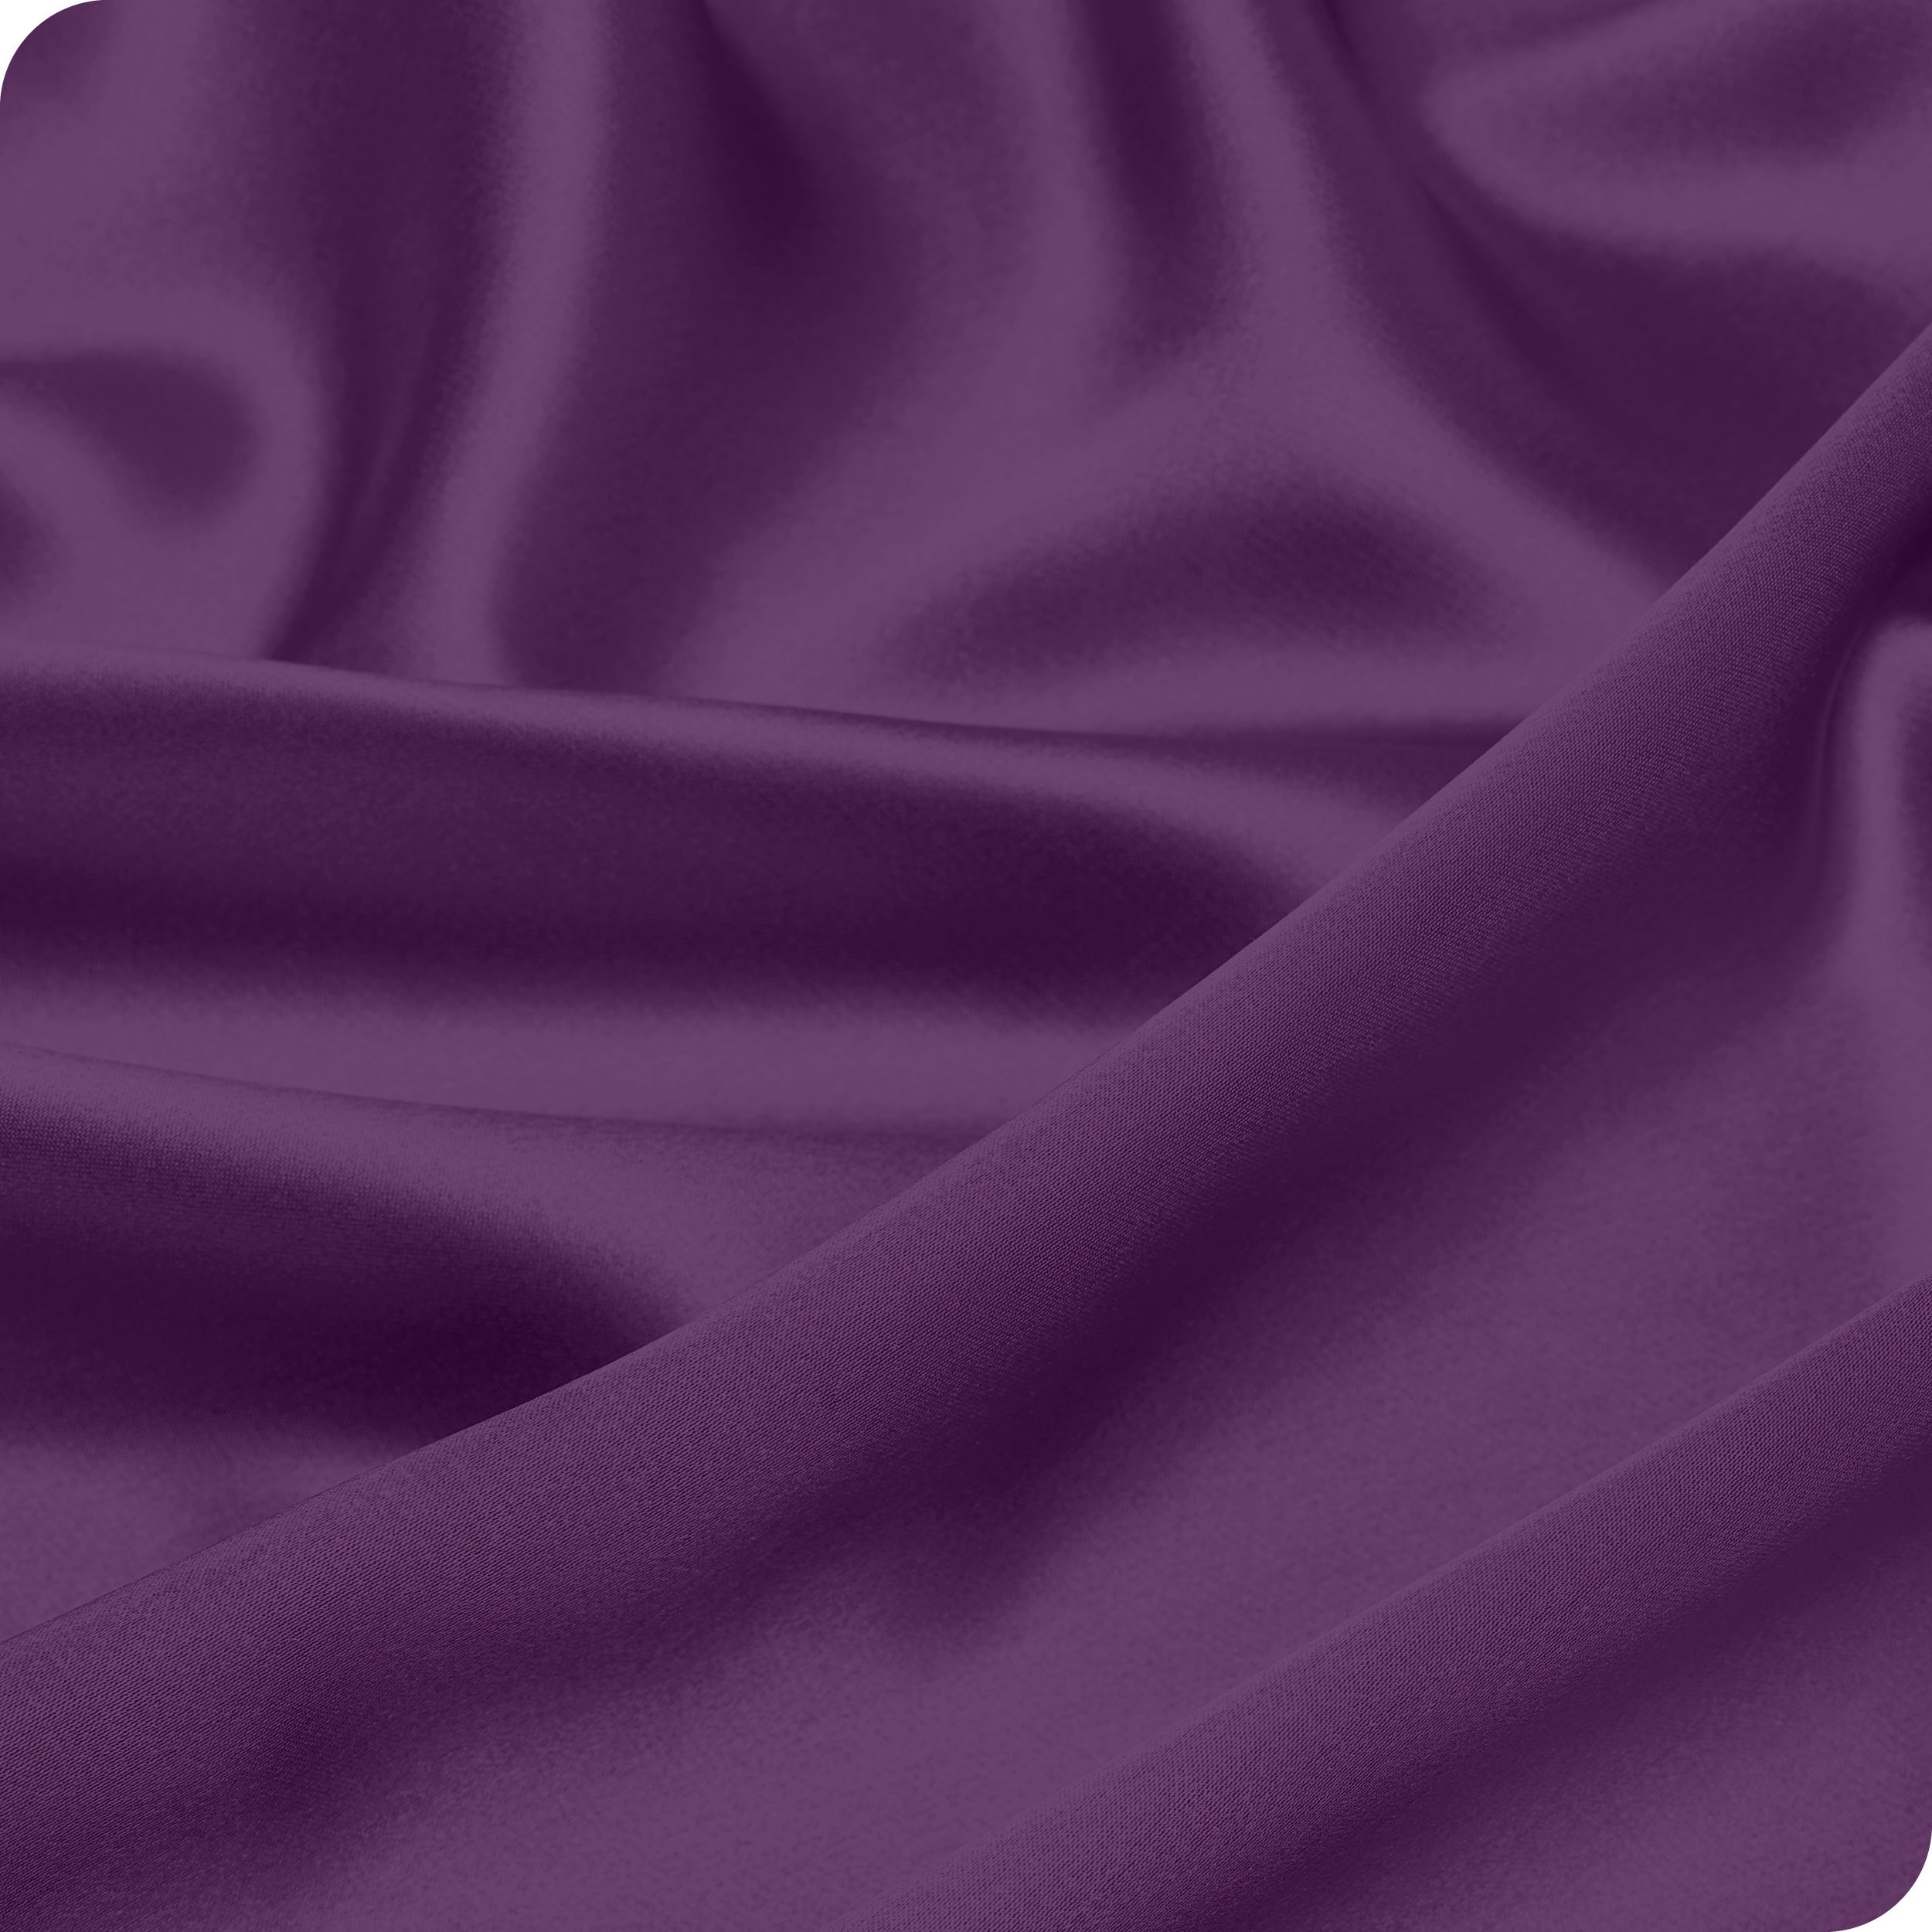 Close up of the satin pillowcase fabric